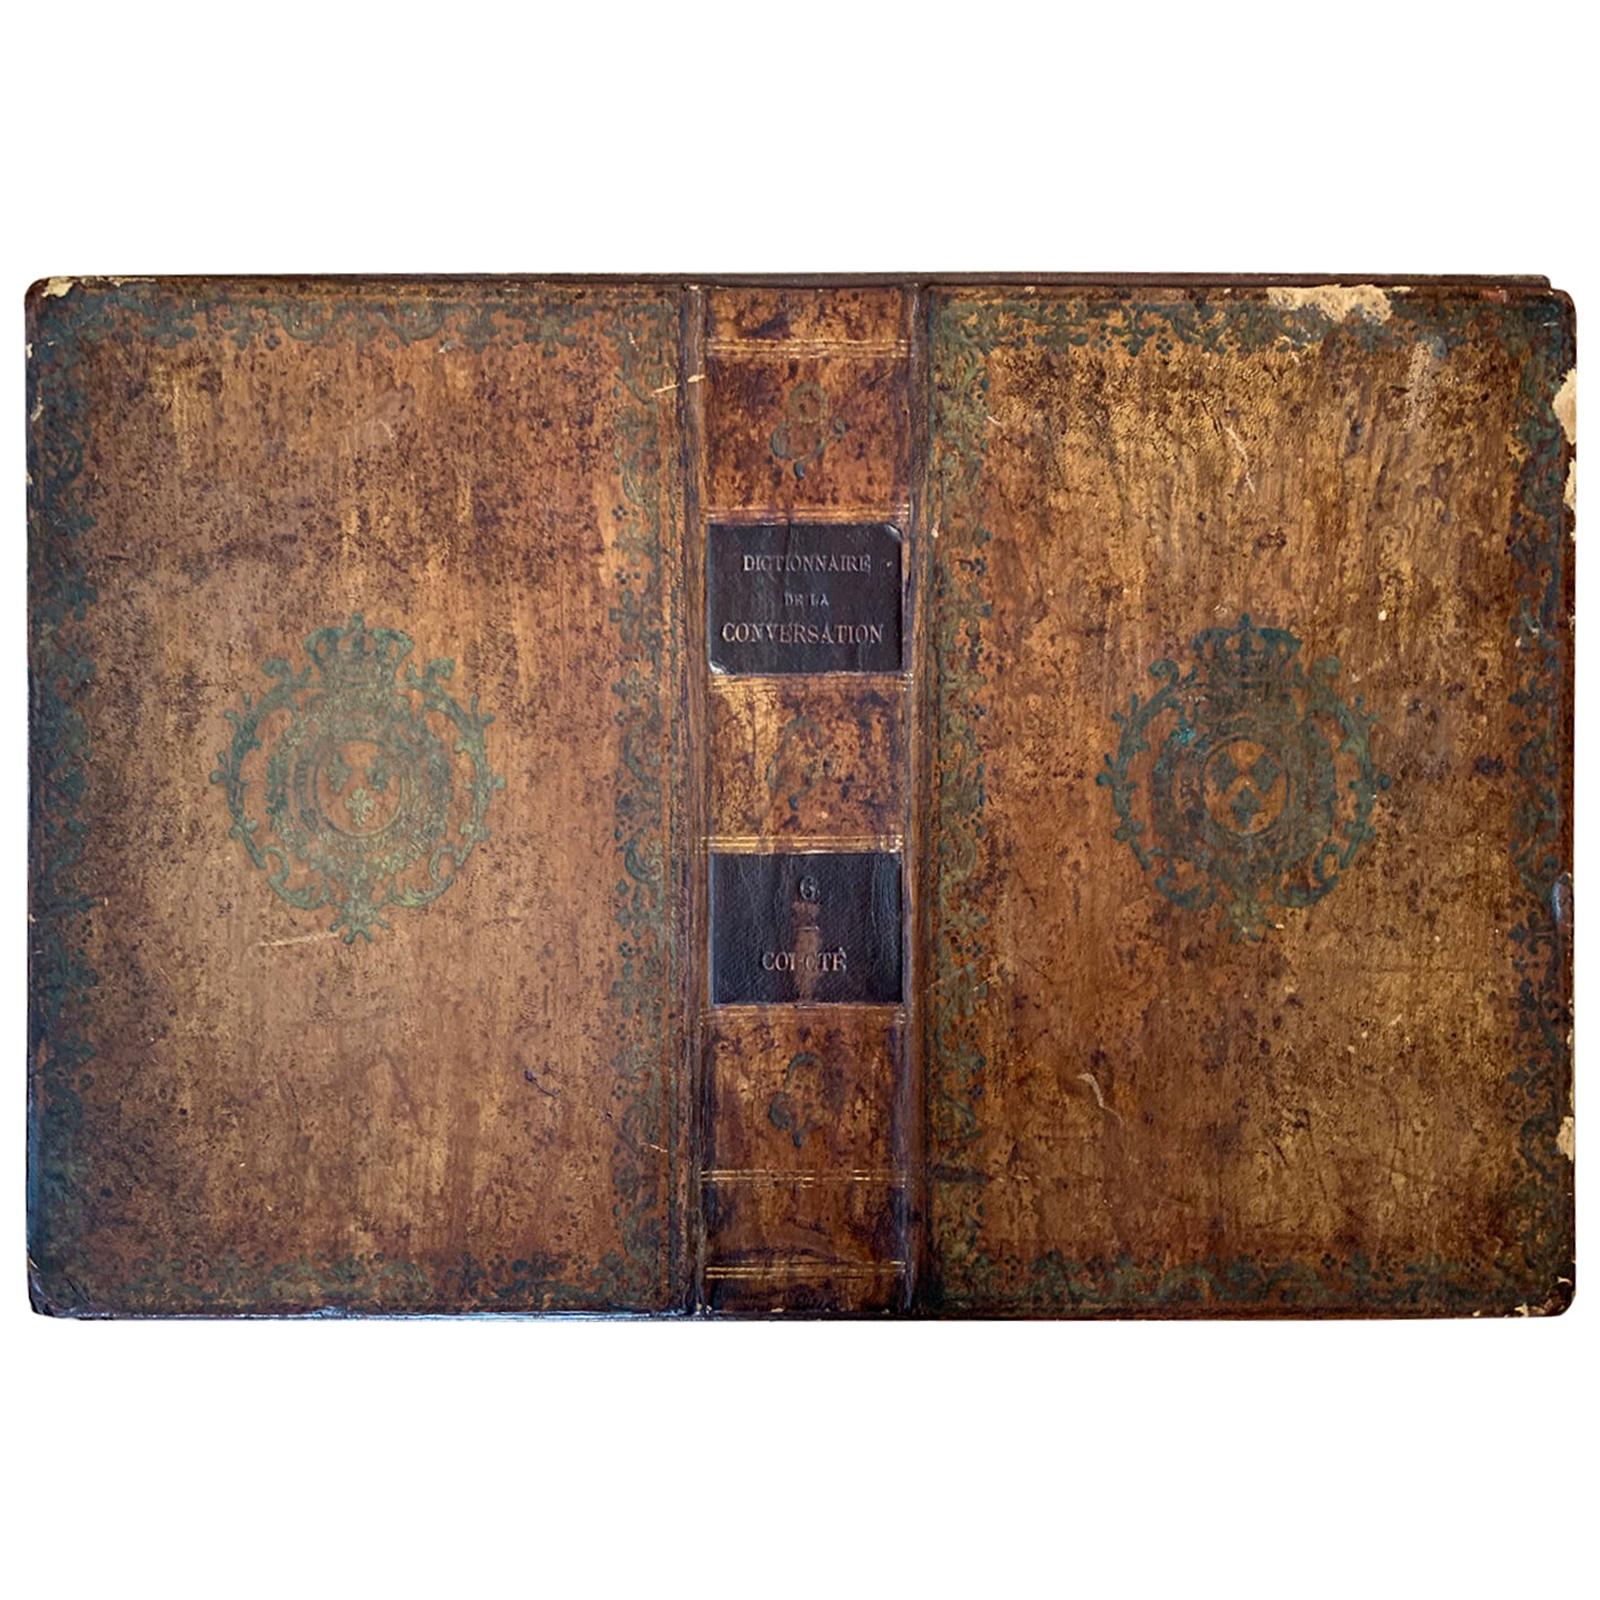 19th Century French Dictionary Cover as Folio "Dictionnaire de la Conversation"